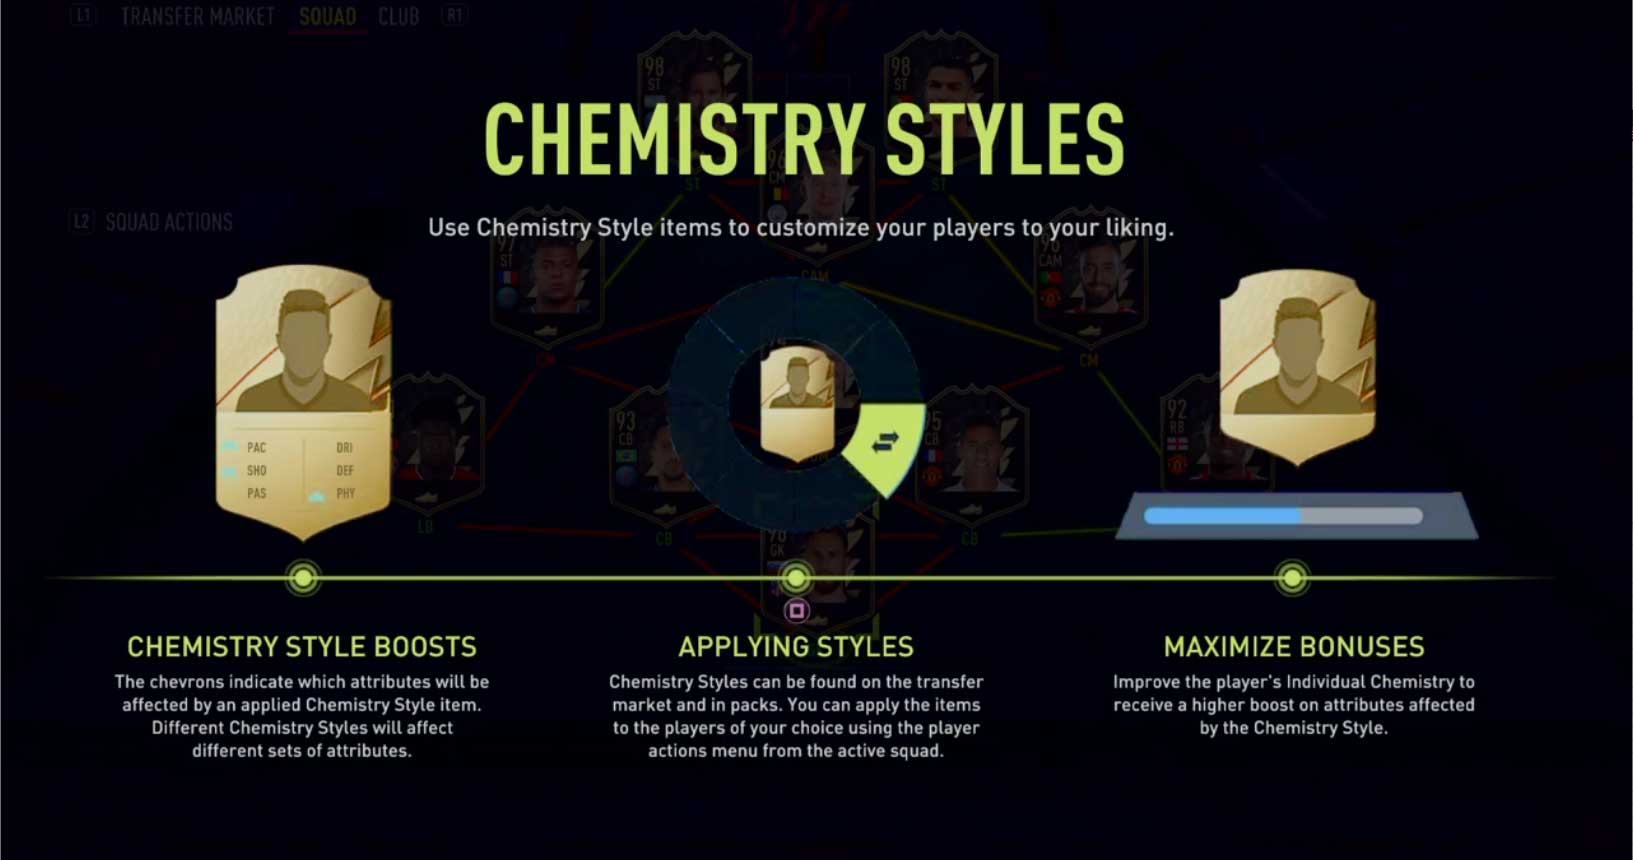 fifa 17 chemistry styles calculator